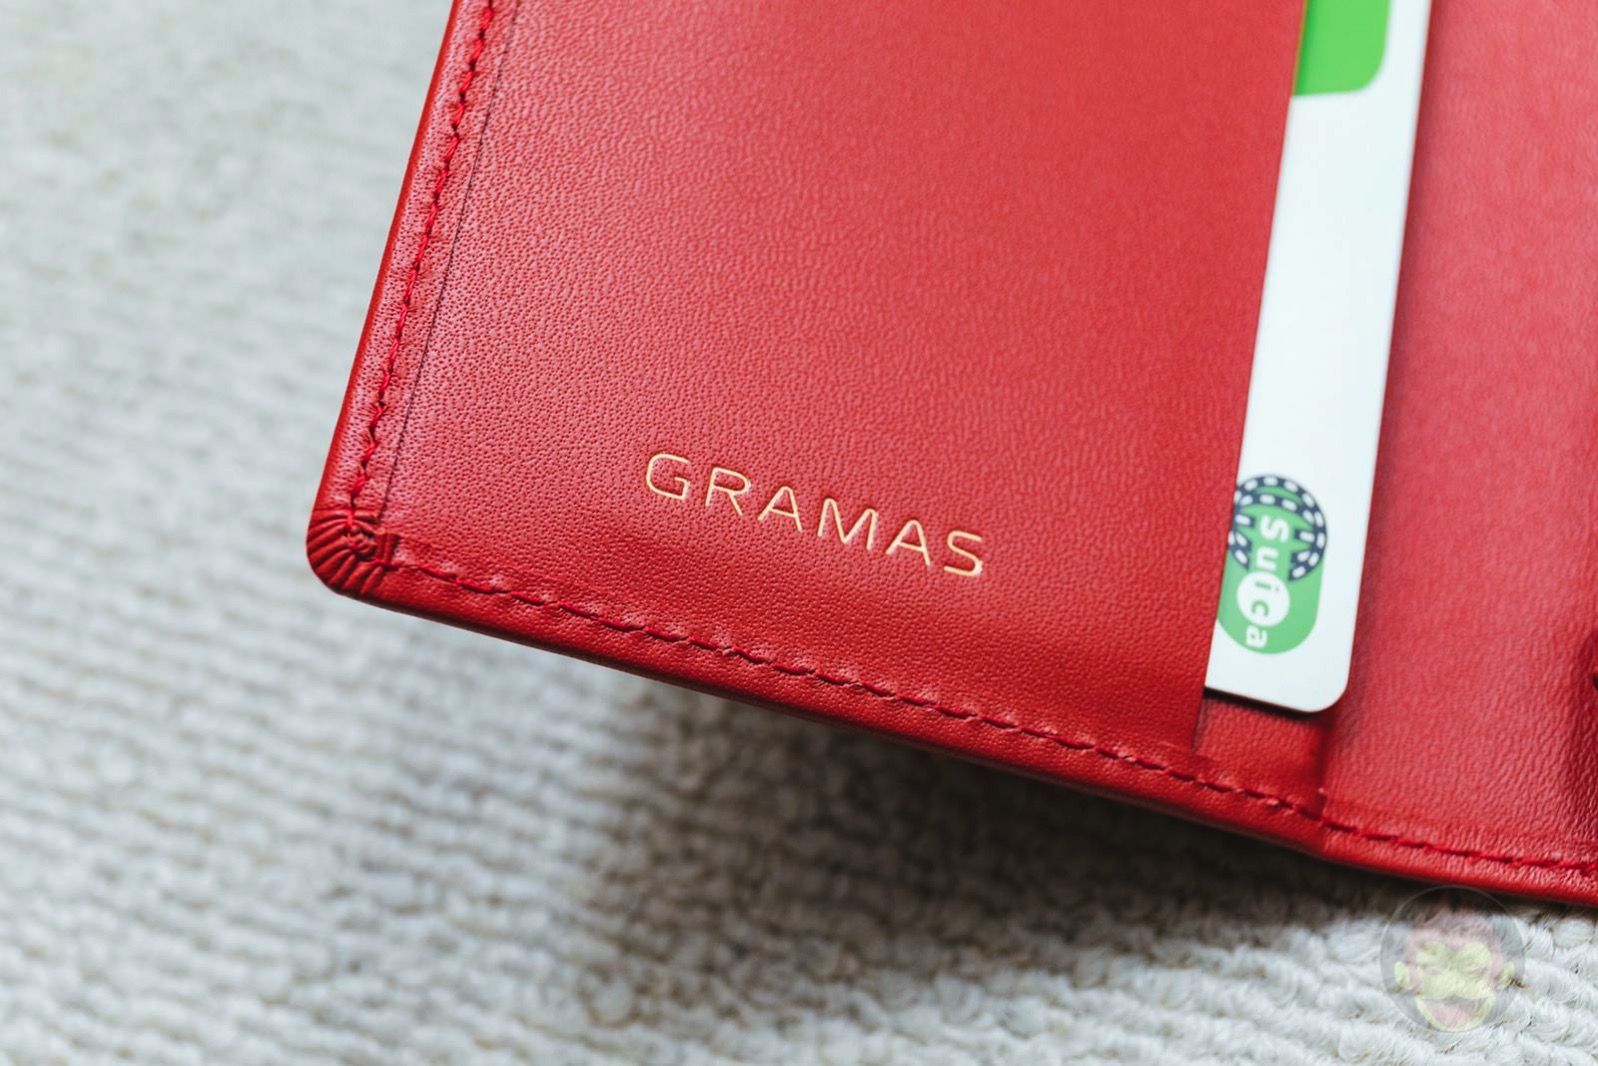 GRAMAS-Full-Leather-Case-Red-for-iPhoneX-SIM-PIN-07.jpg